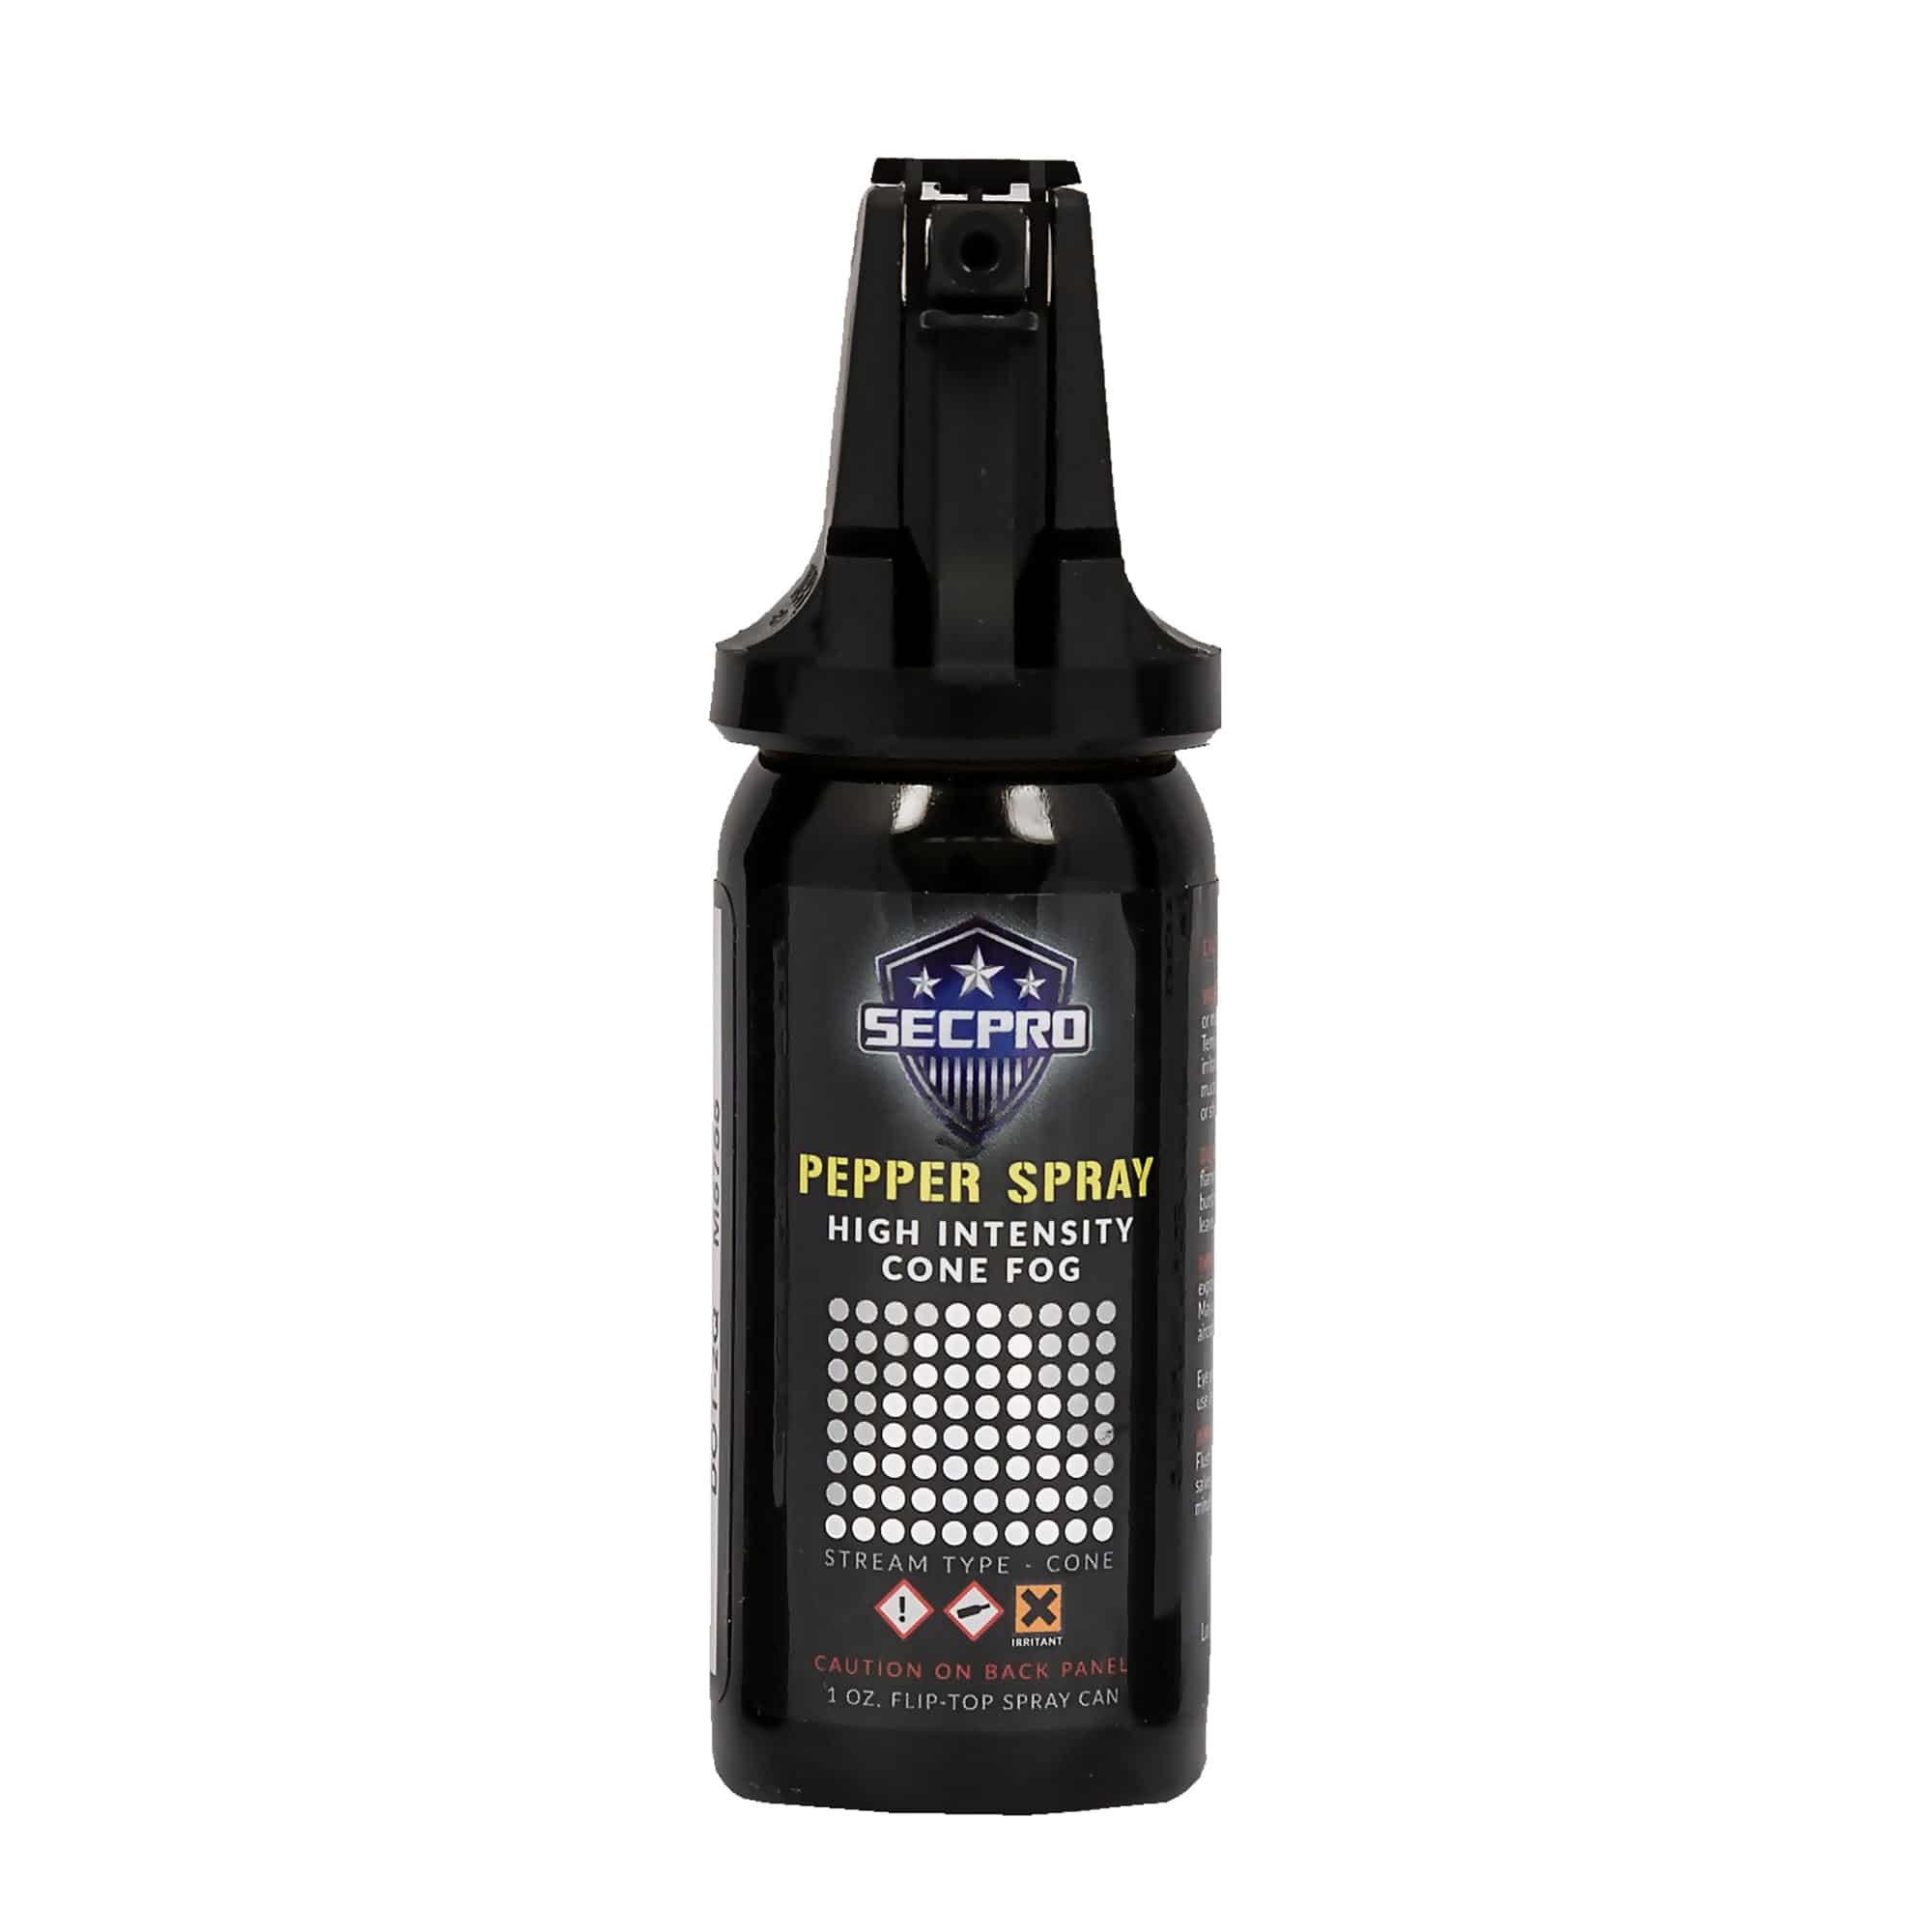 Pepper Enforcement® Fogger Pepper Spray – 4 oz. Flip-Top